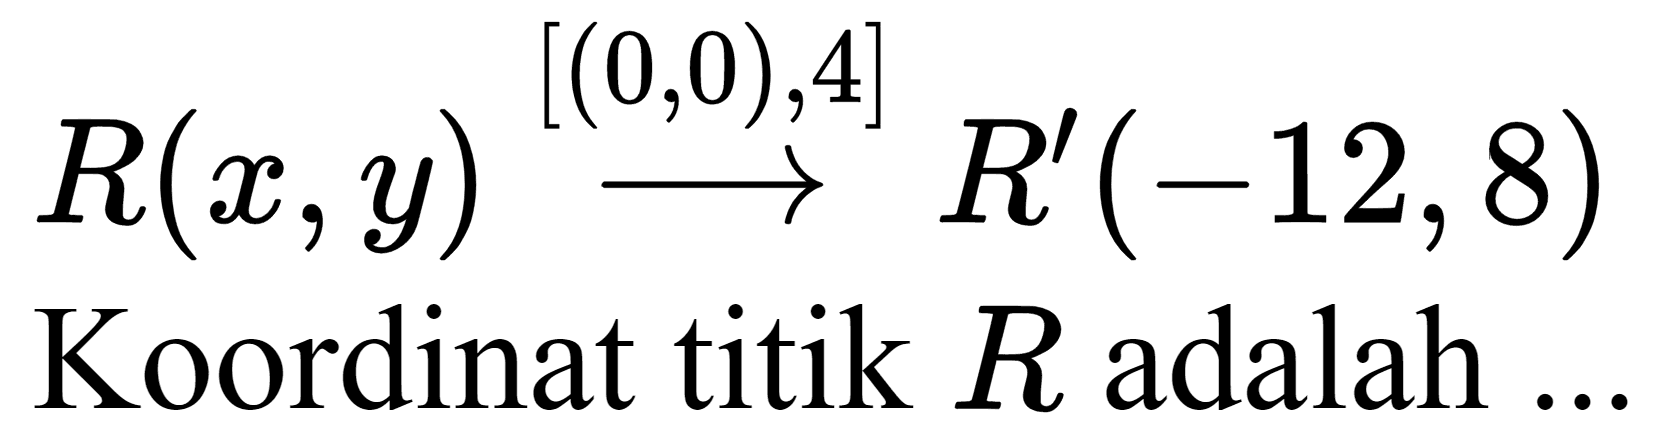 [(0,0), 4]
R(x, y) -> R'(-12,8)

Koordinat titik  R  adalah ...